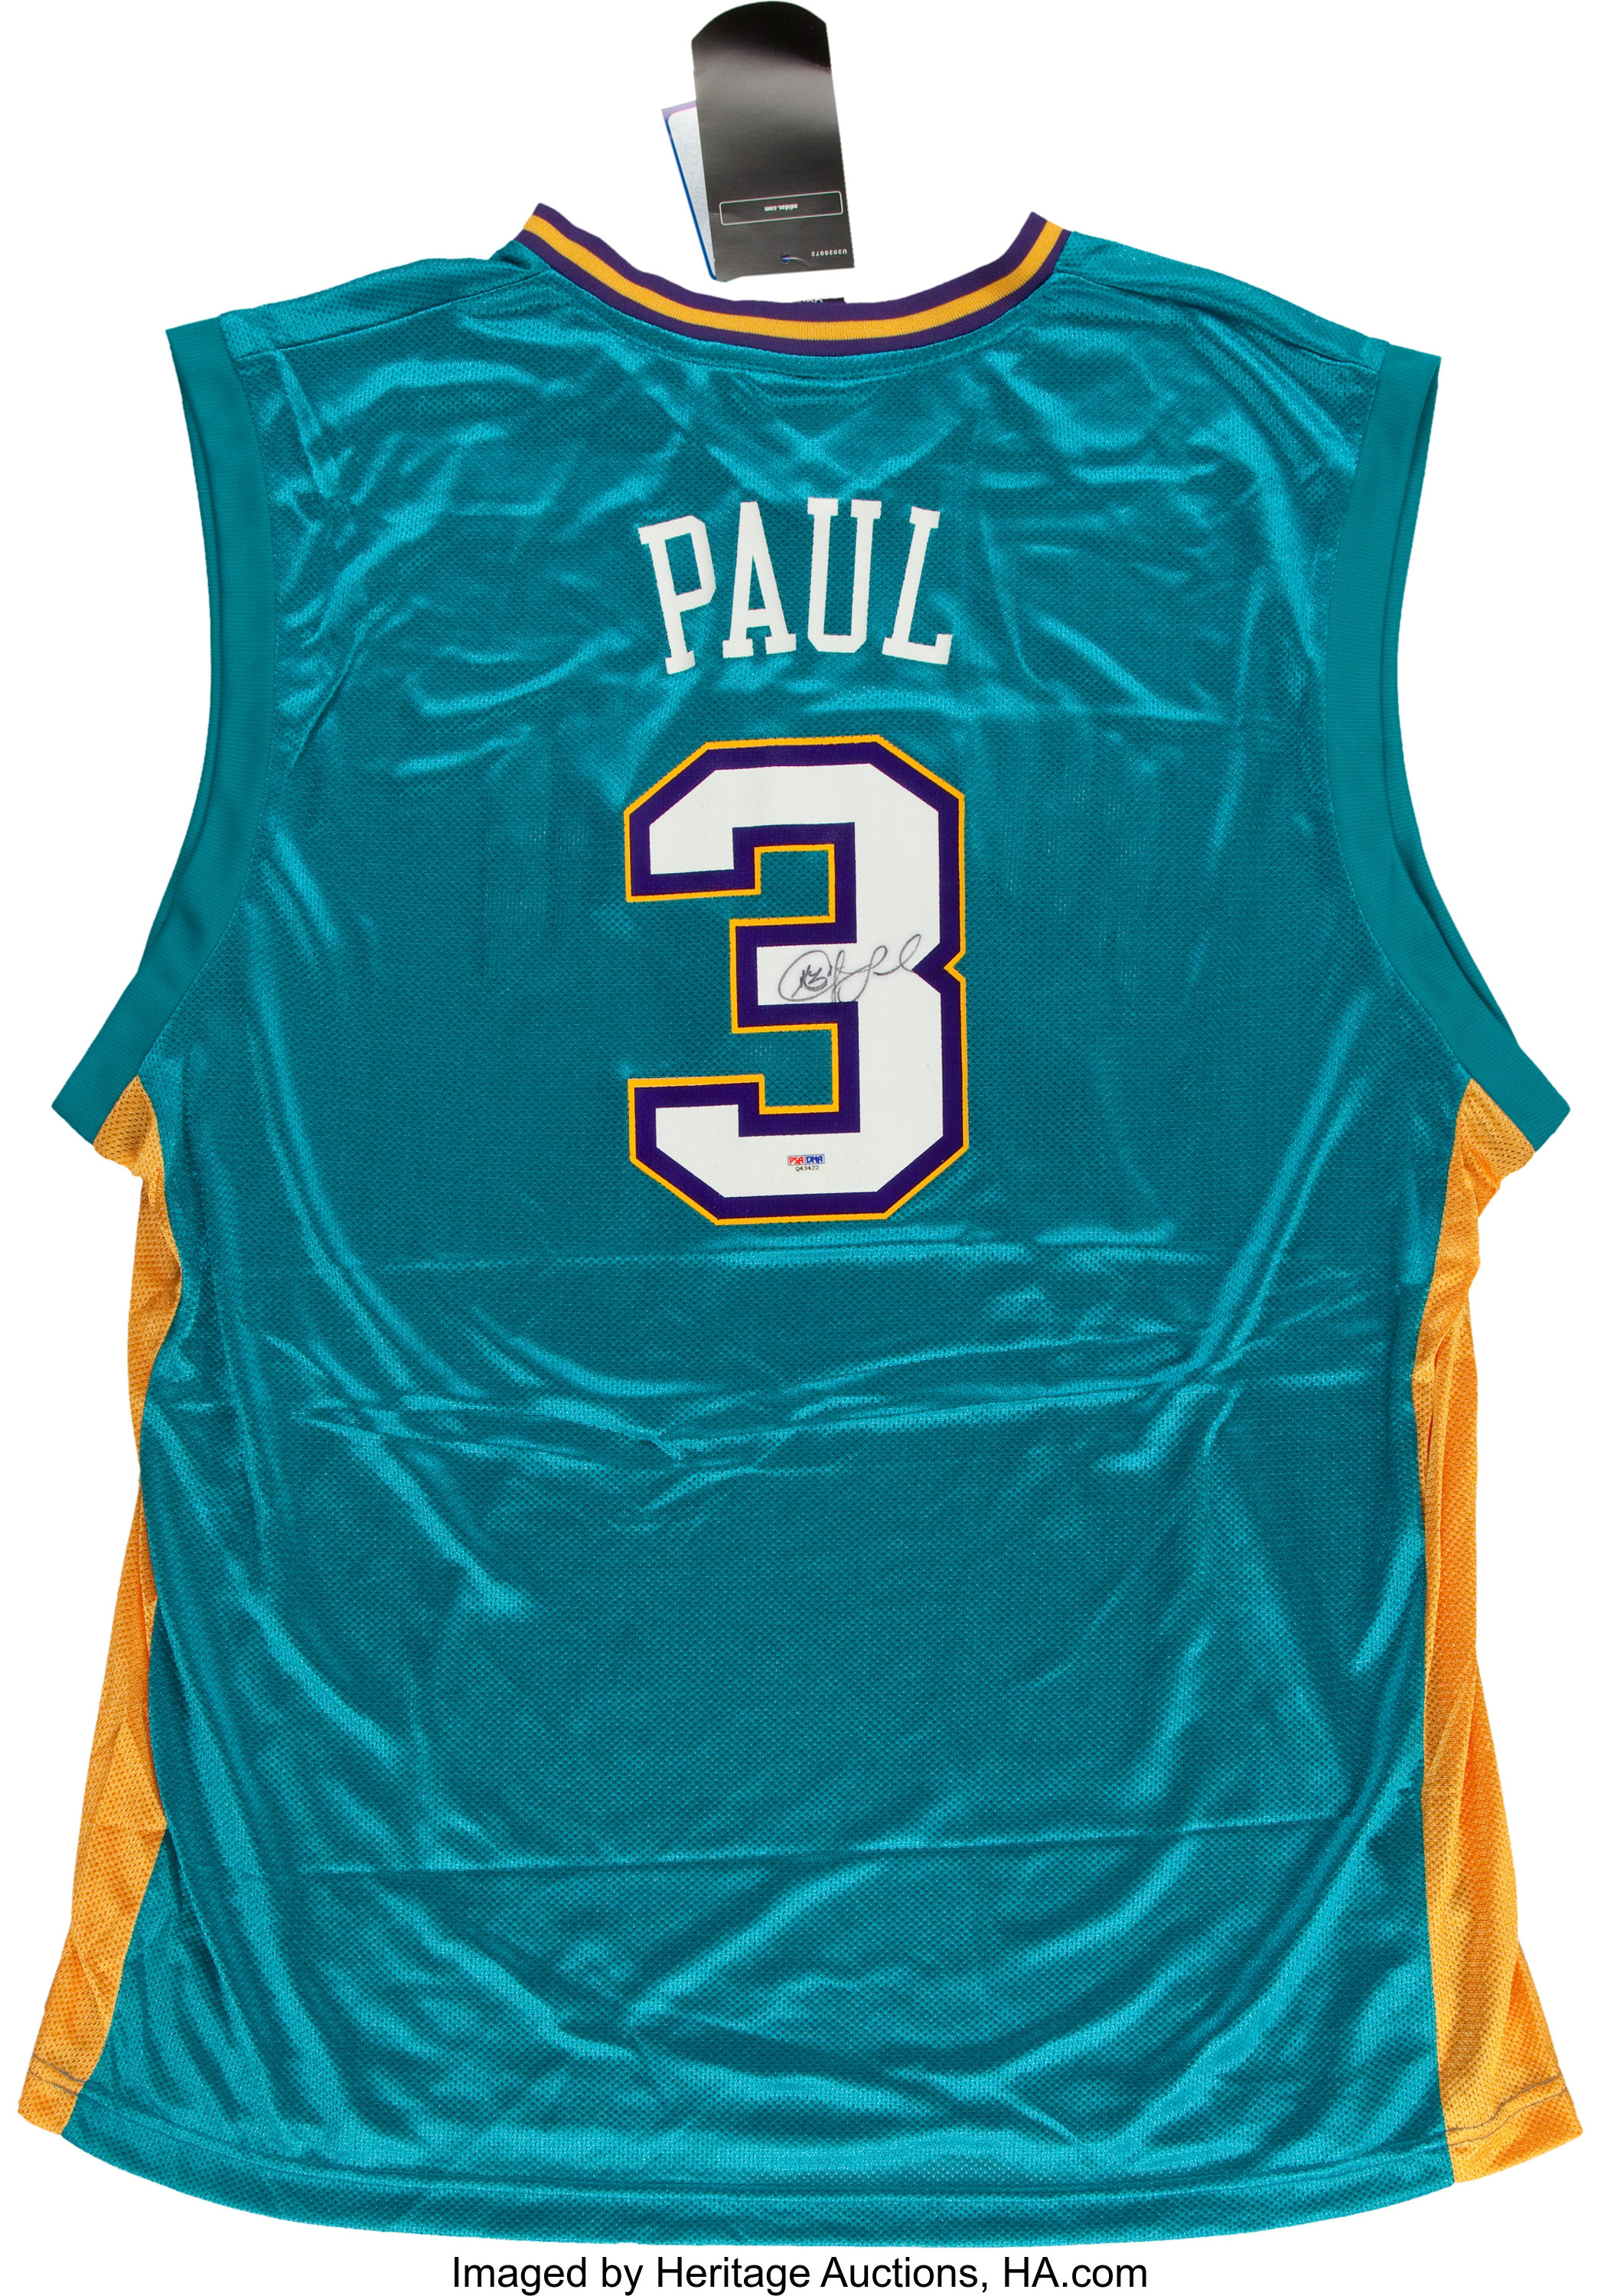 Chris Paul New Orleans Pelicans NBA Jerseys for sale